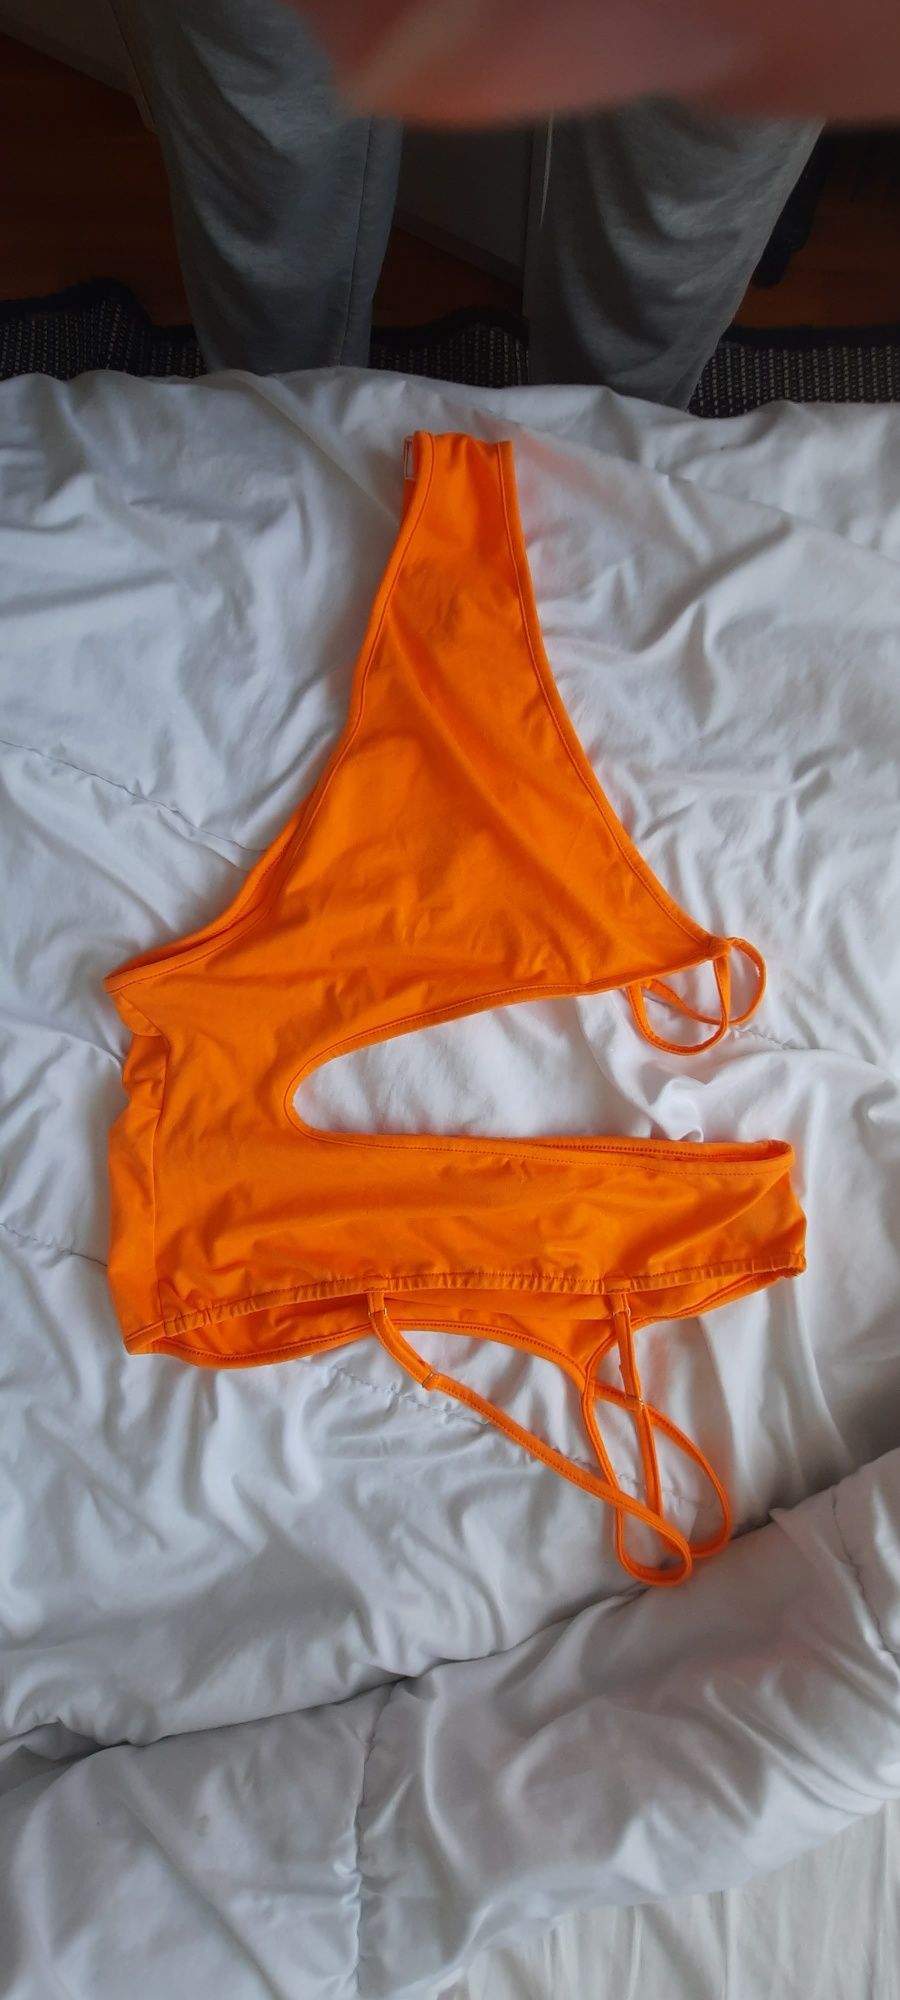 body cor de laranja